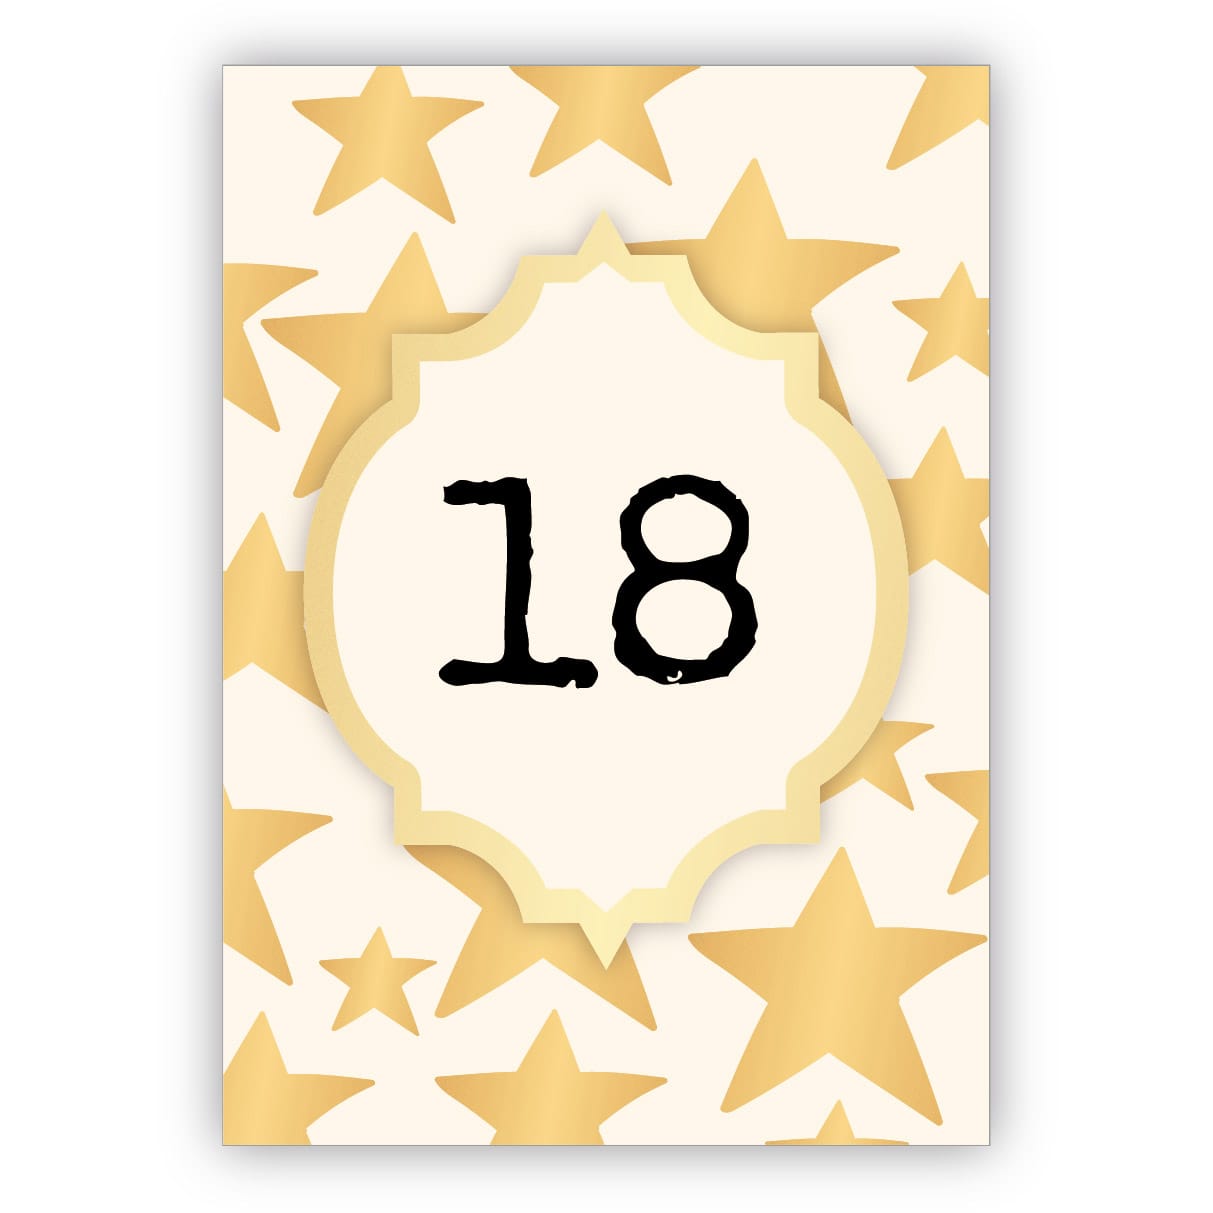 Edle Geburtstagskarte in gold Optik zum 18. Geburtstag